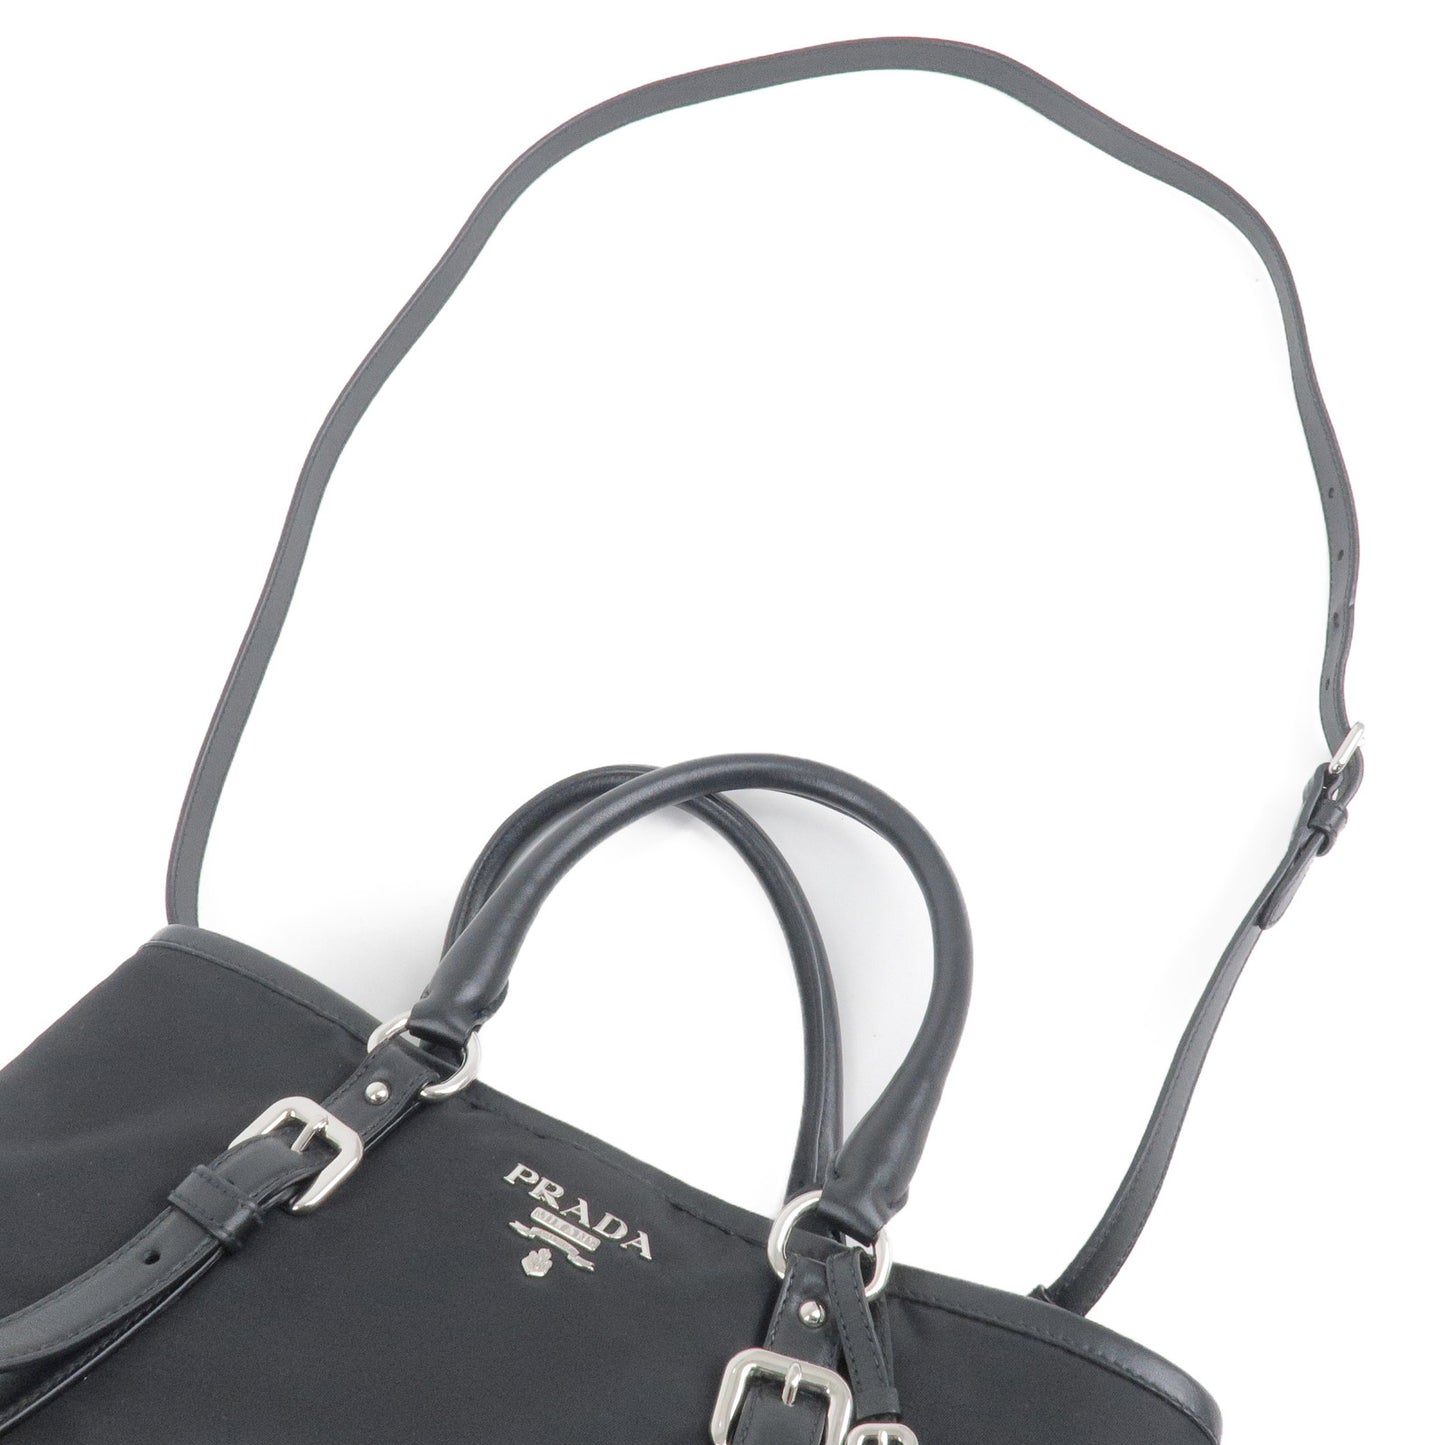 PRADA Nylon Leather 2Way Hand Bag Shoulder Bag NERO Black 1BA832